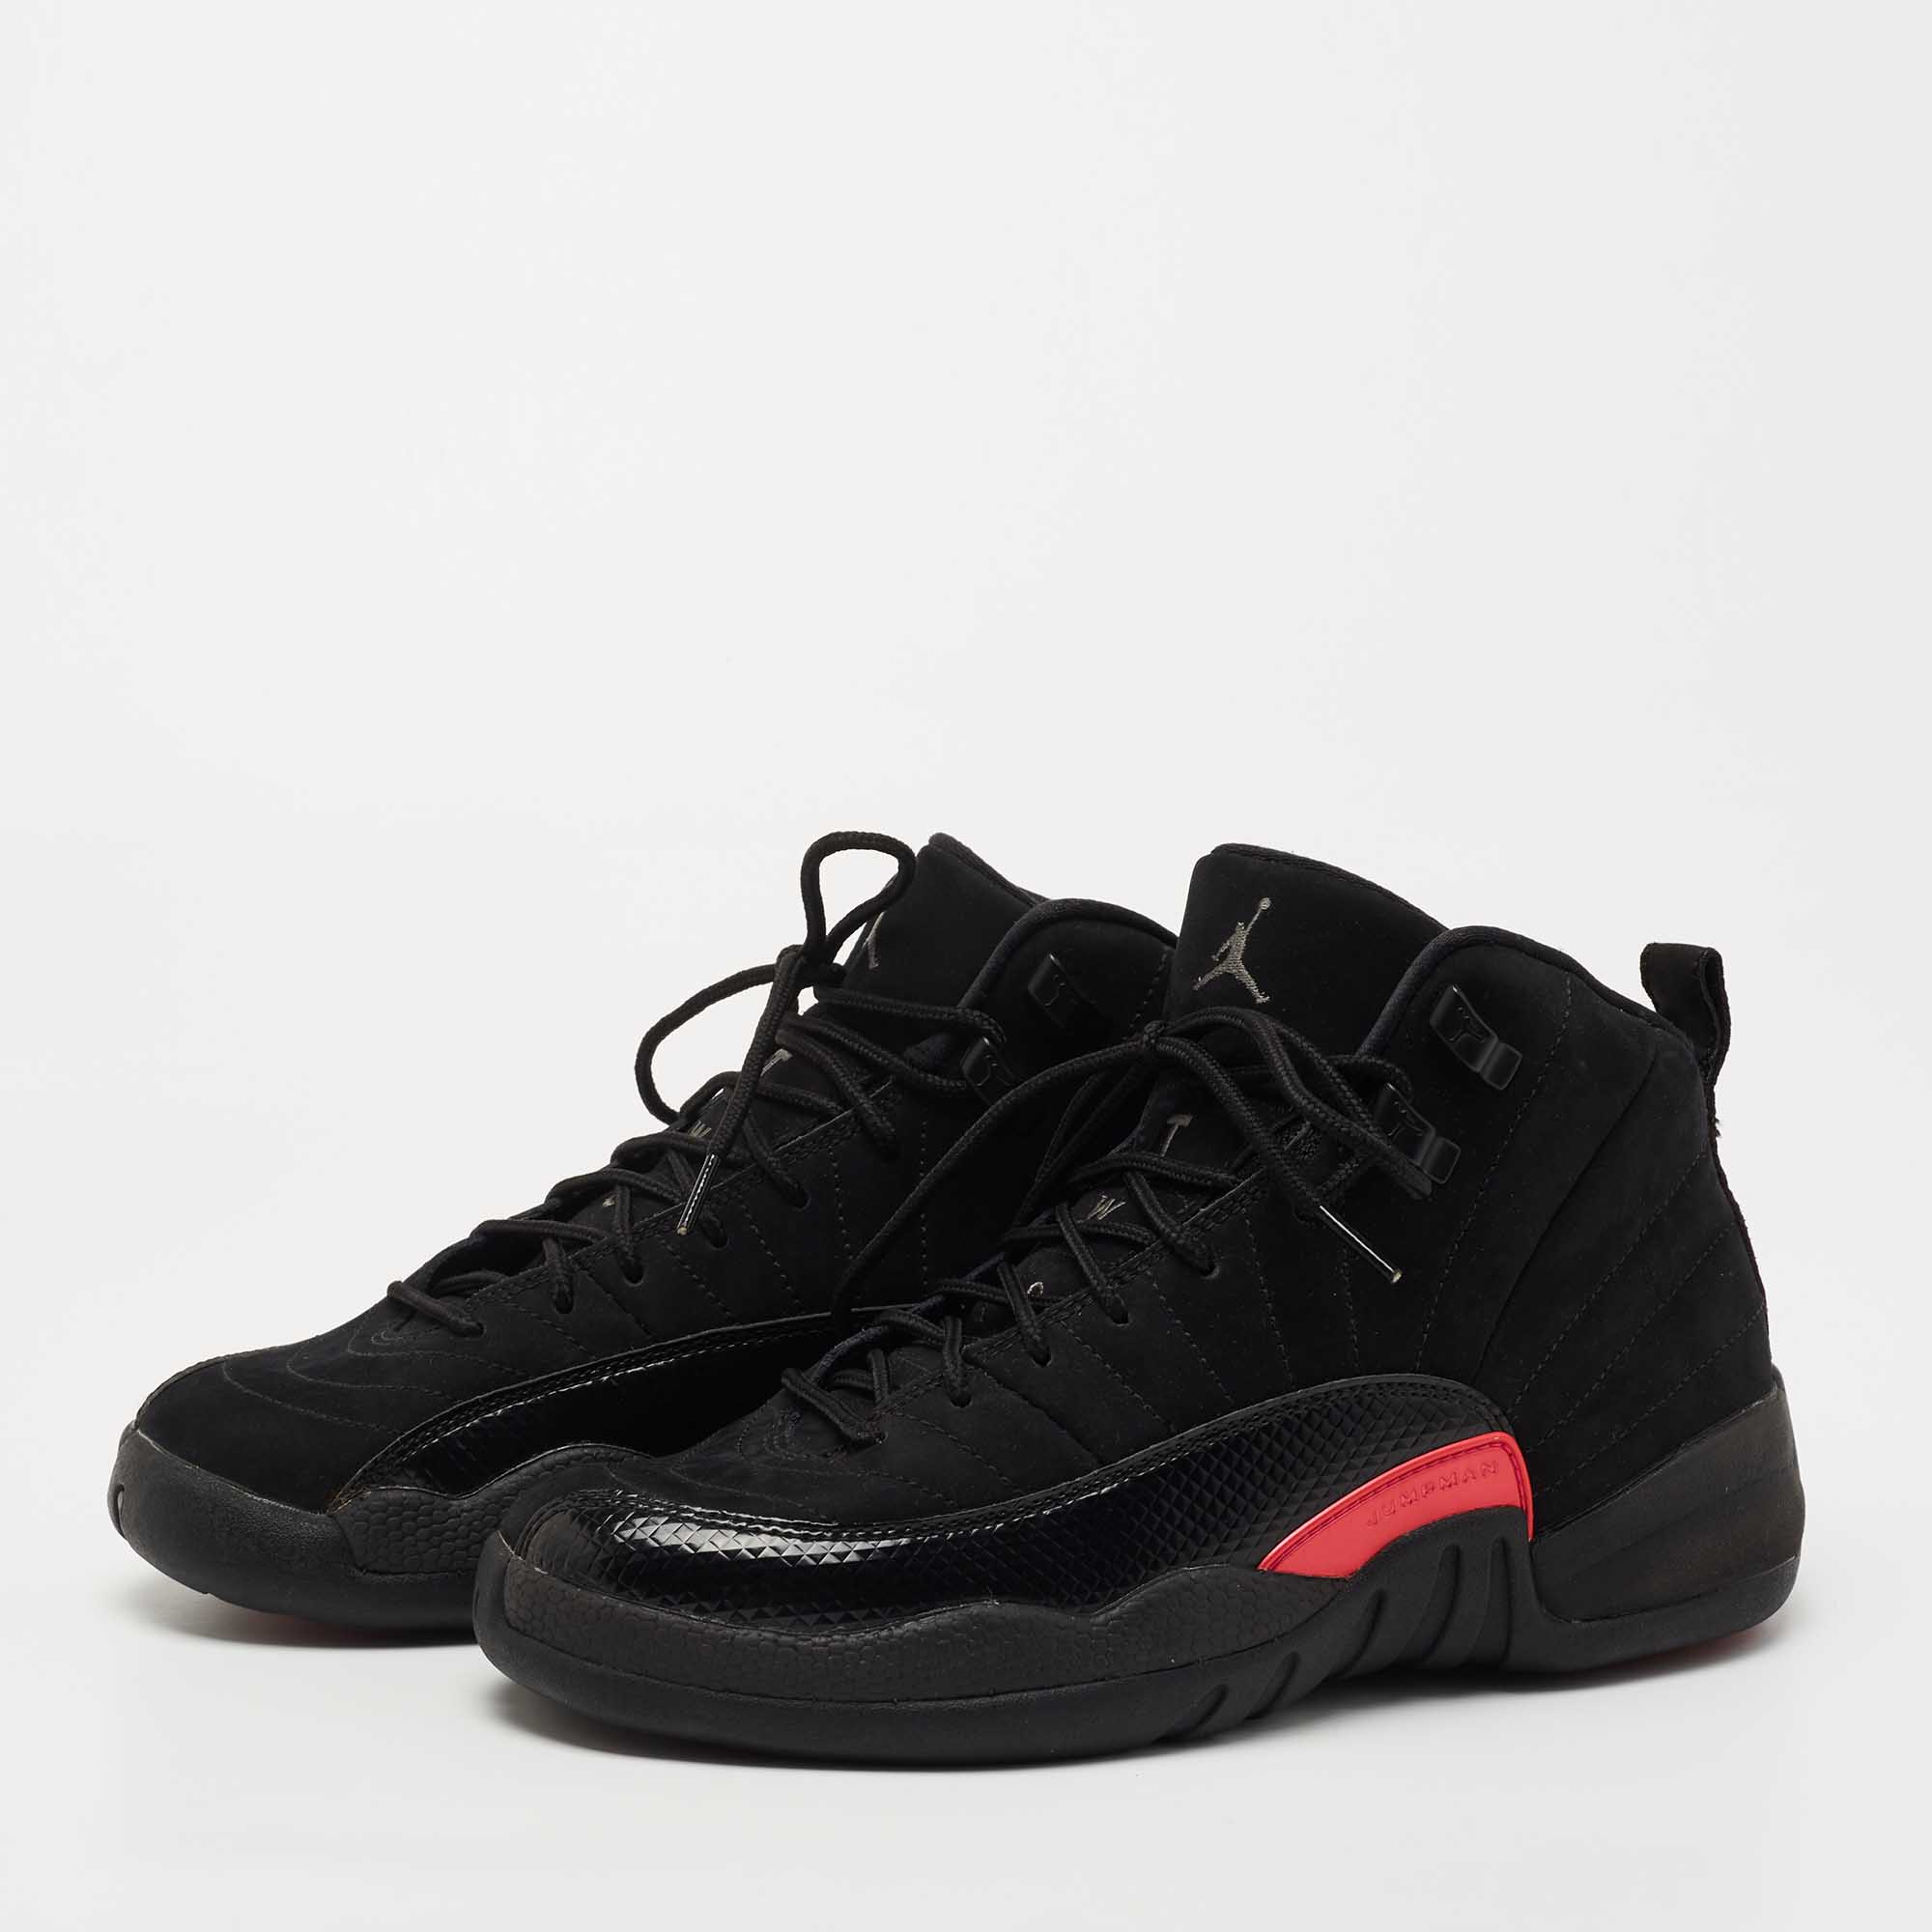 

Air Jordan Black Nubuck and Leather 12 Retro High Top Sneakers Size